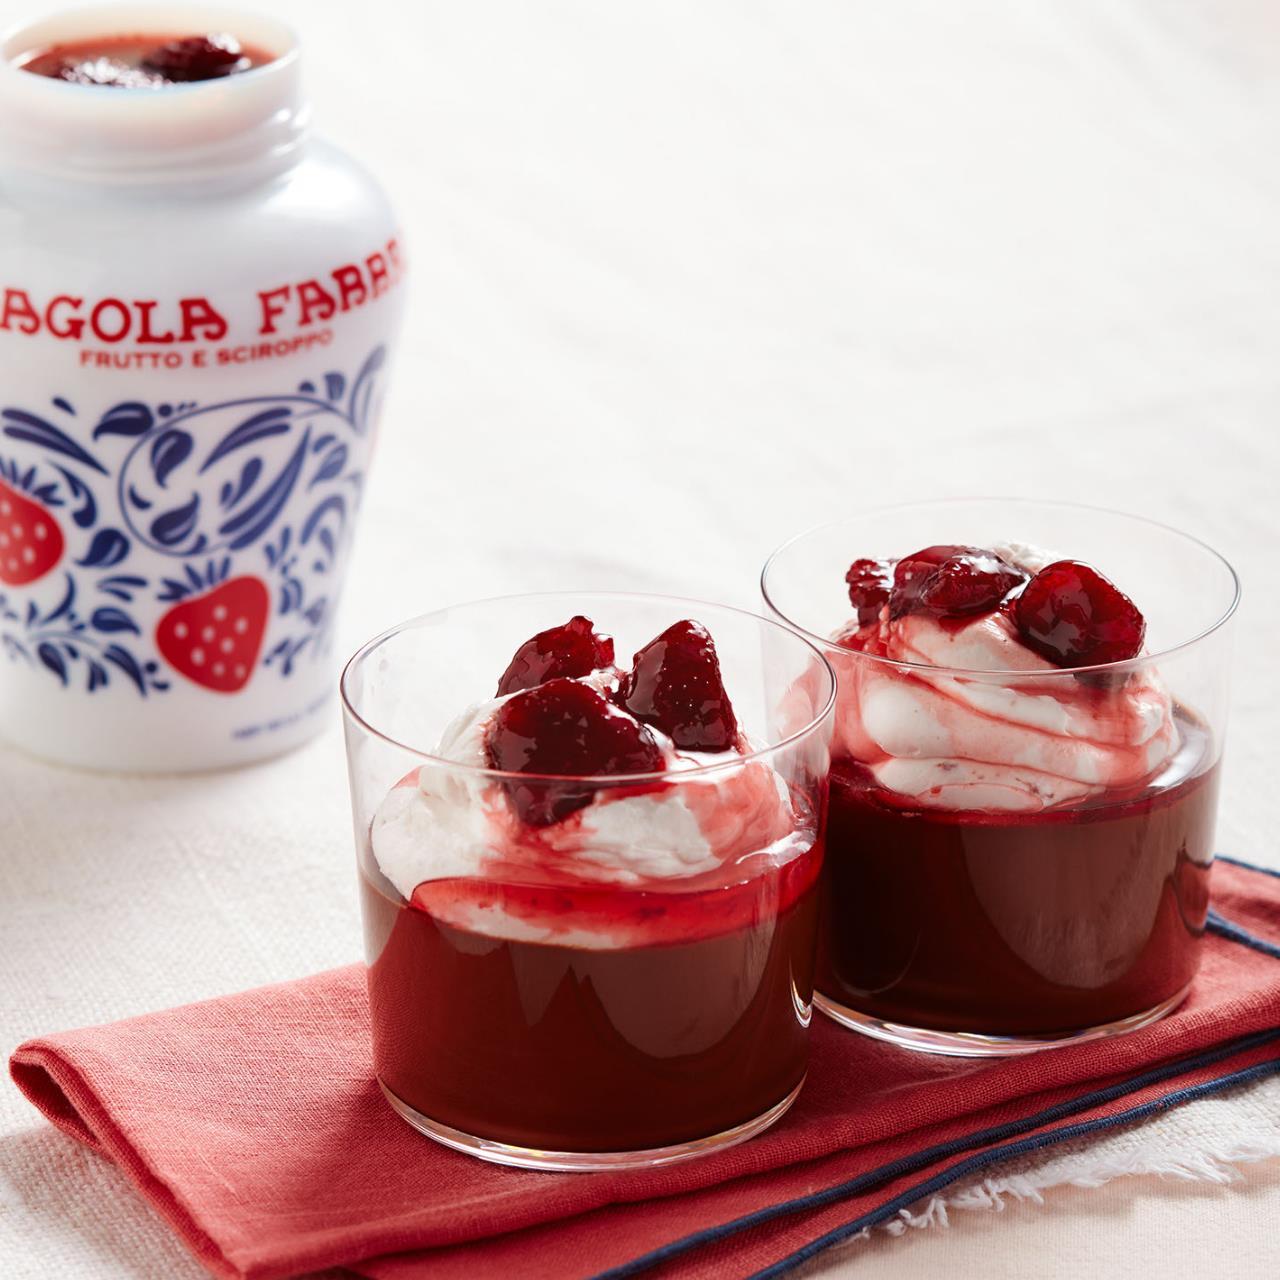 Chocolate pudding with Fragola Fabbri